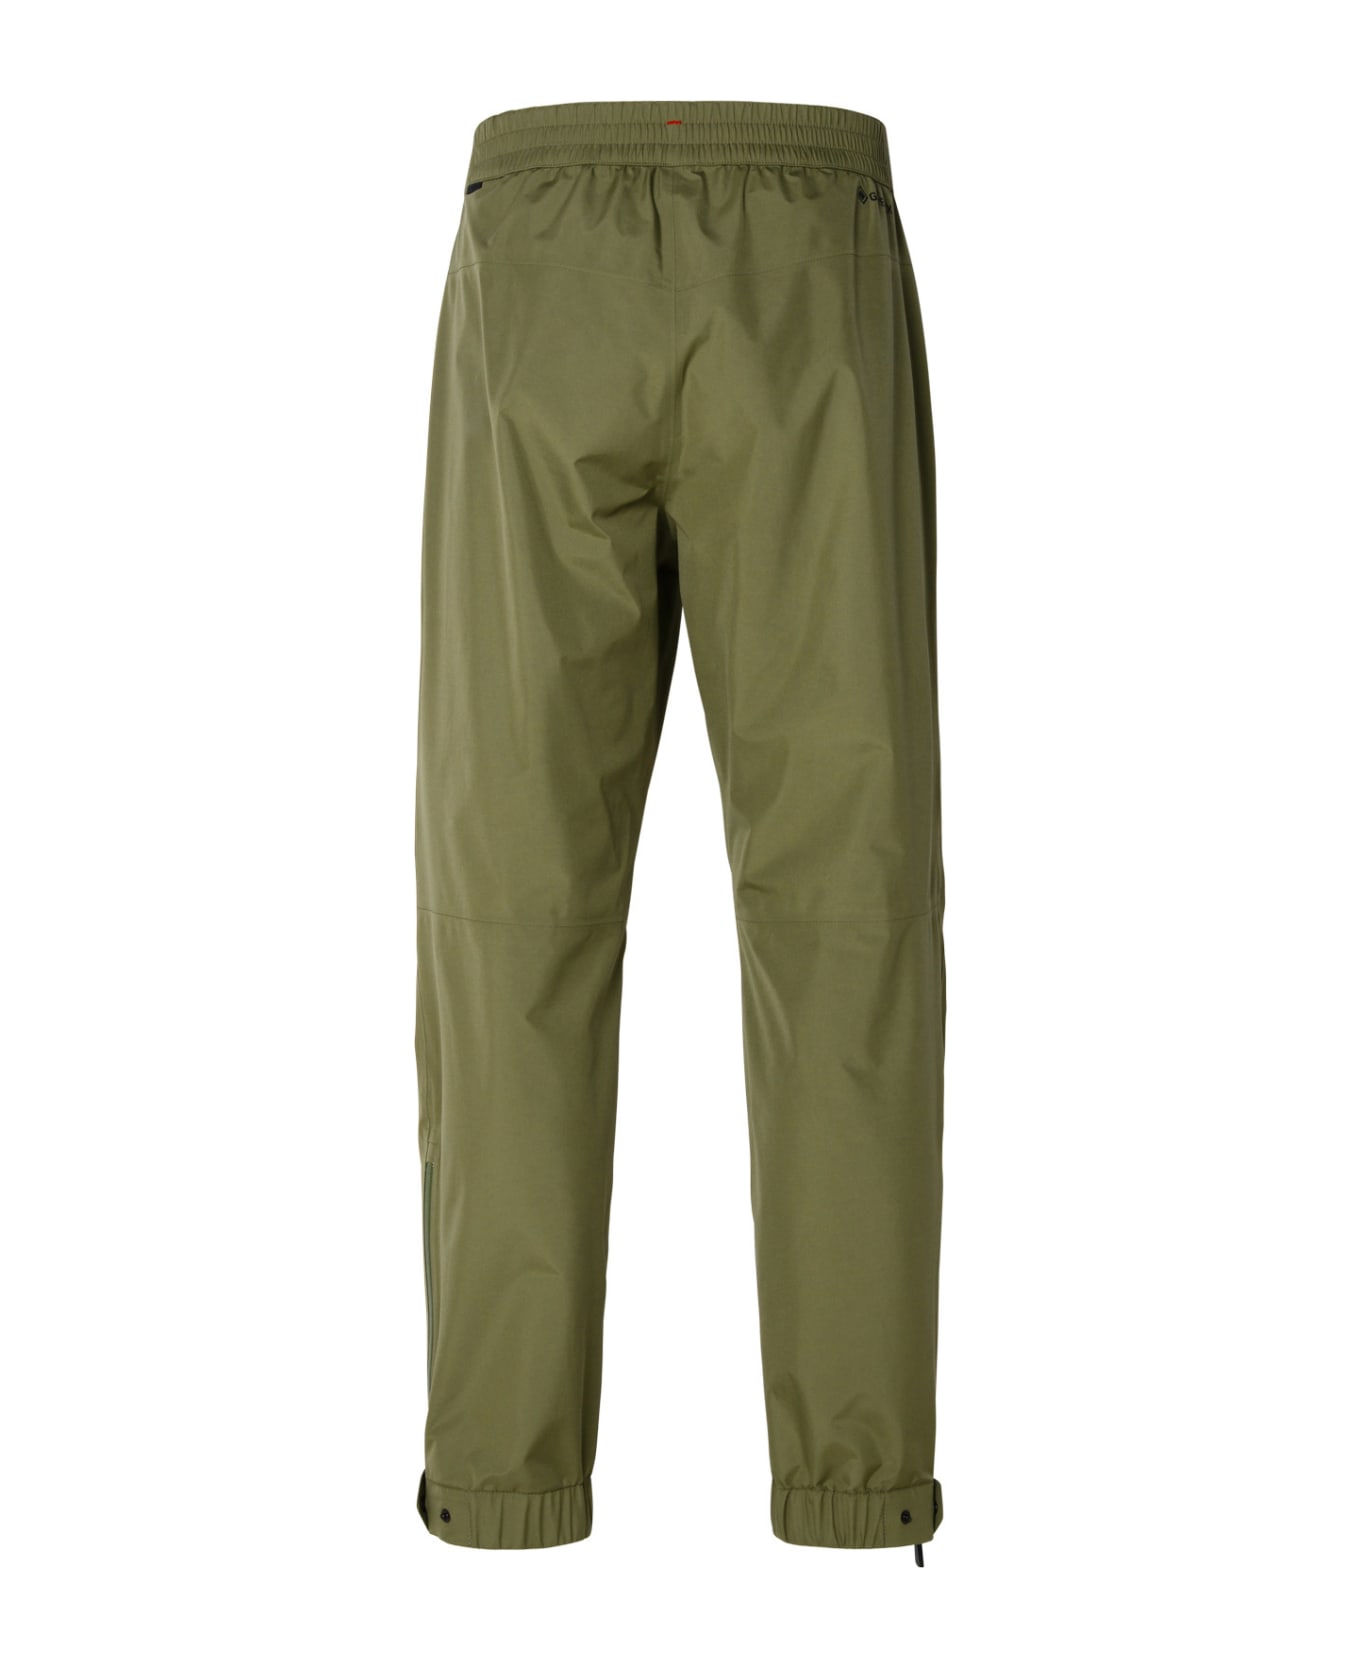 Moncler Grenoble Green Polyester Pants - Green